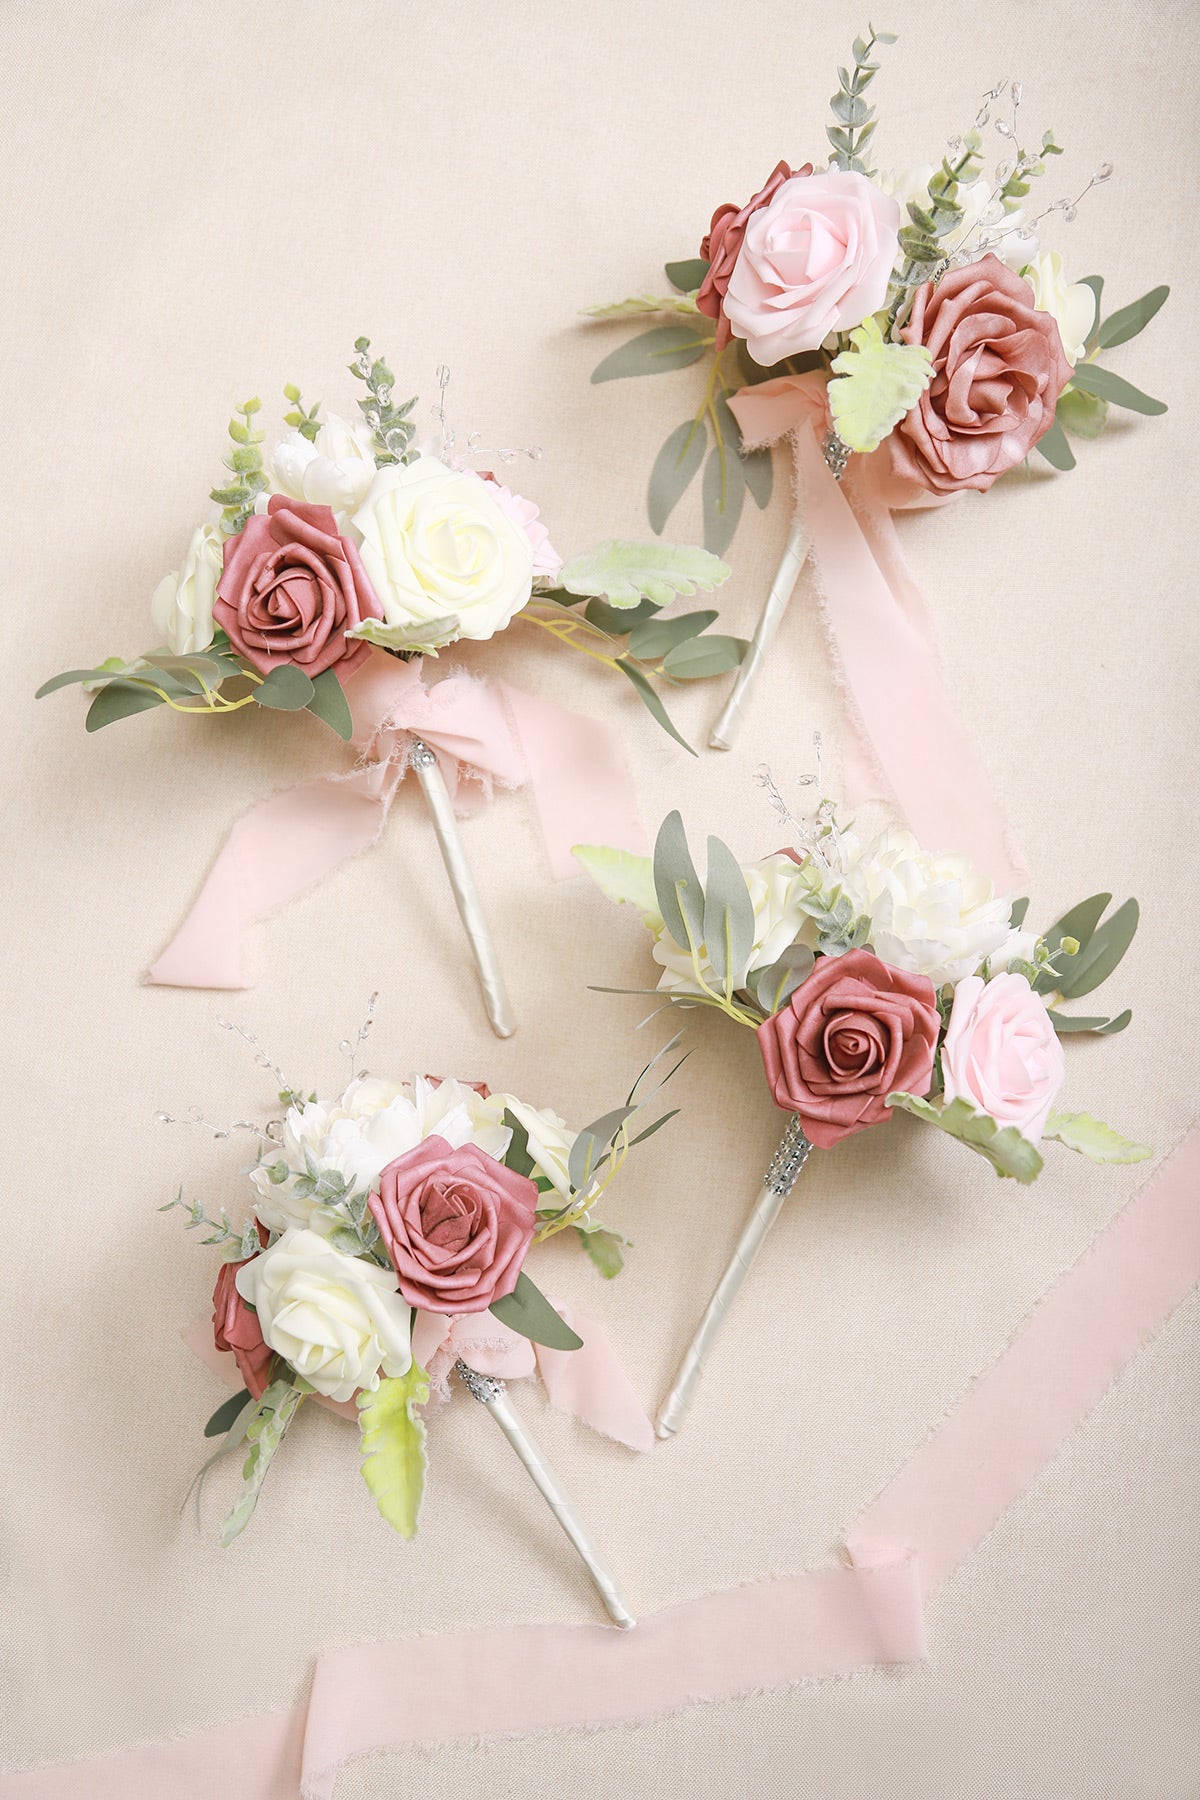 8''/10'' Bridesmaid Bouquets, Set of 4, Wedding Centerpieces - 4 Colors